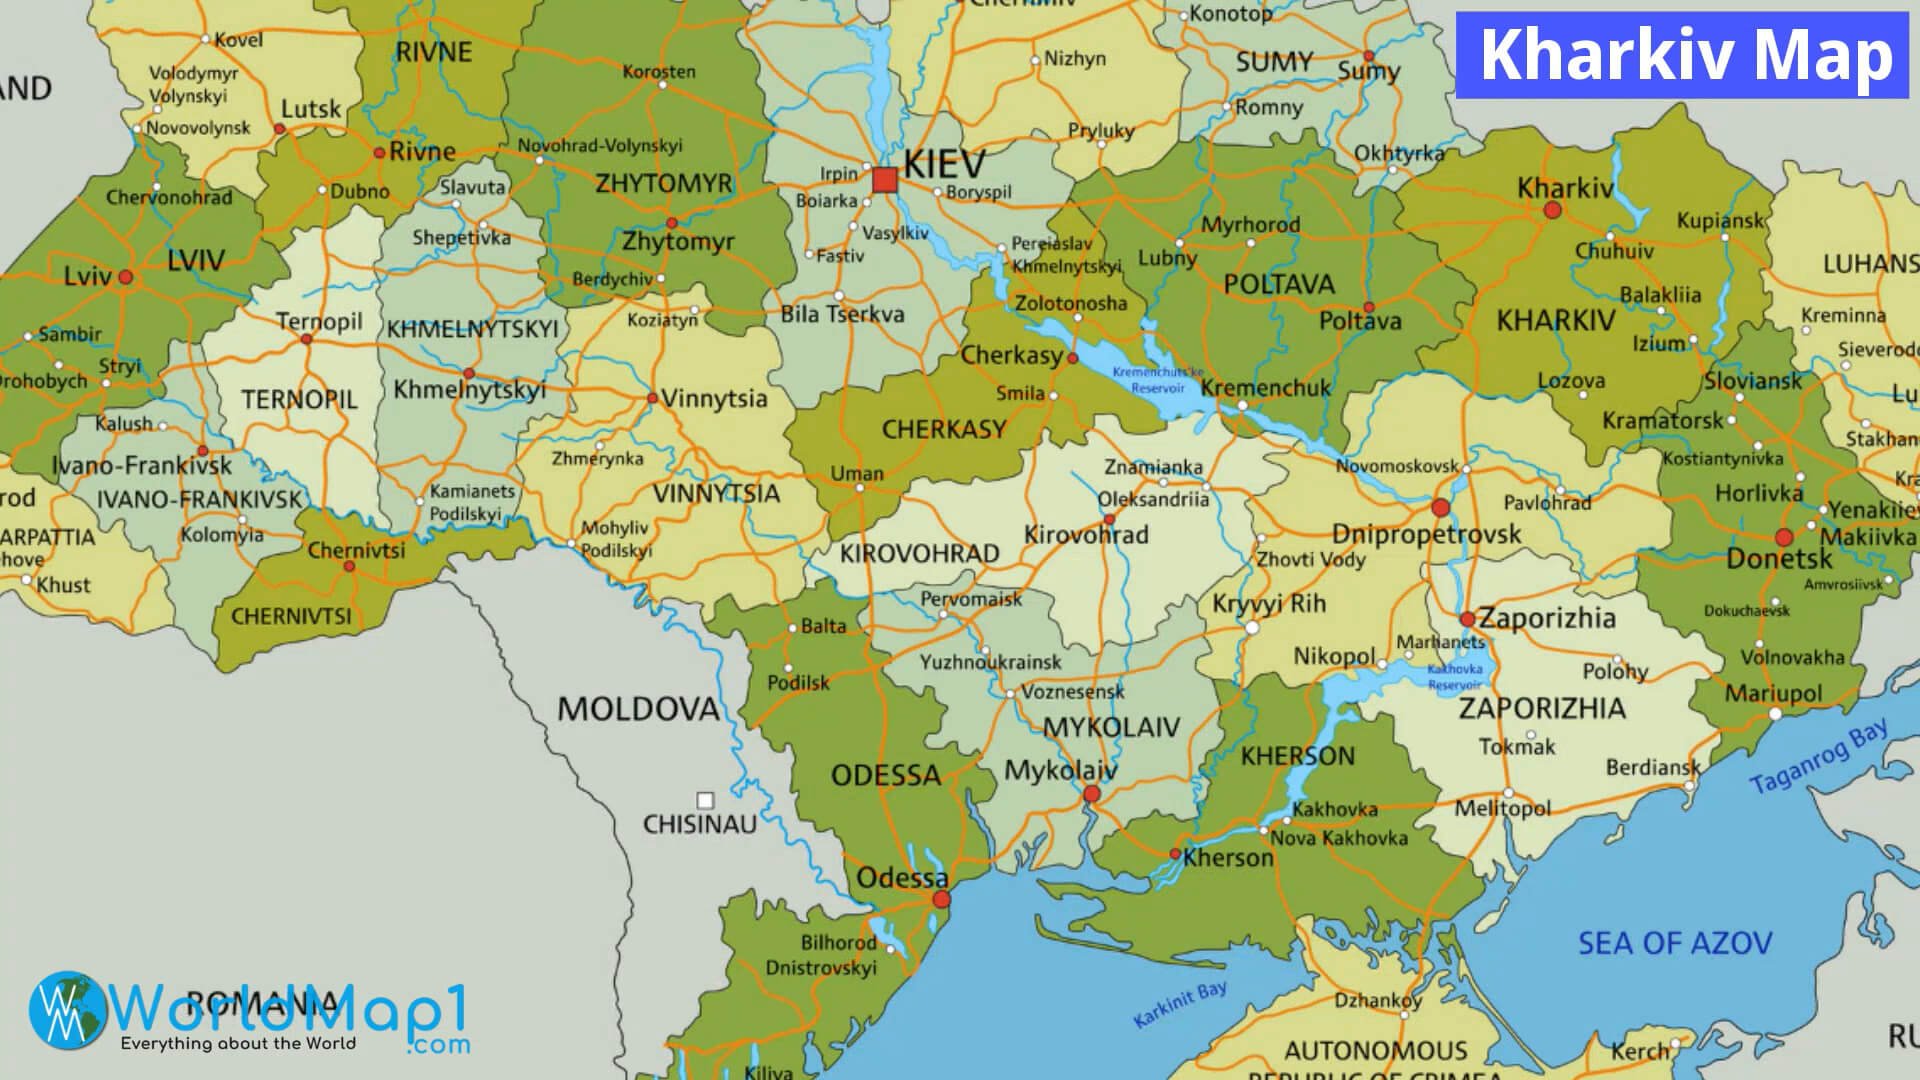 Where is located Kharkiv in Ukraine